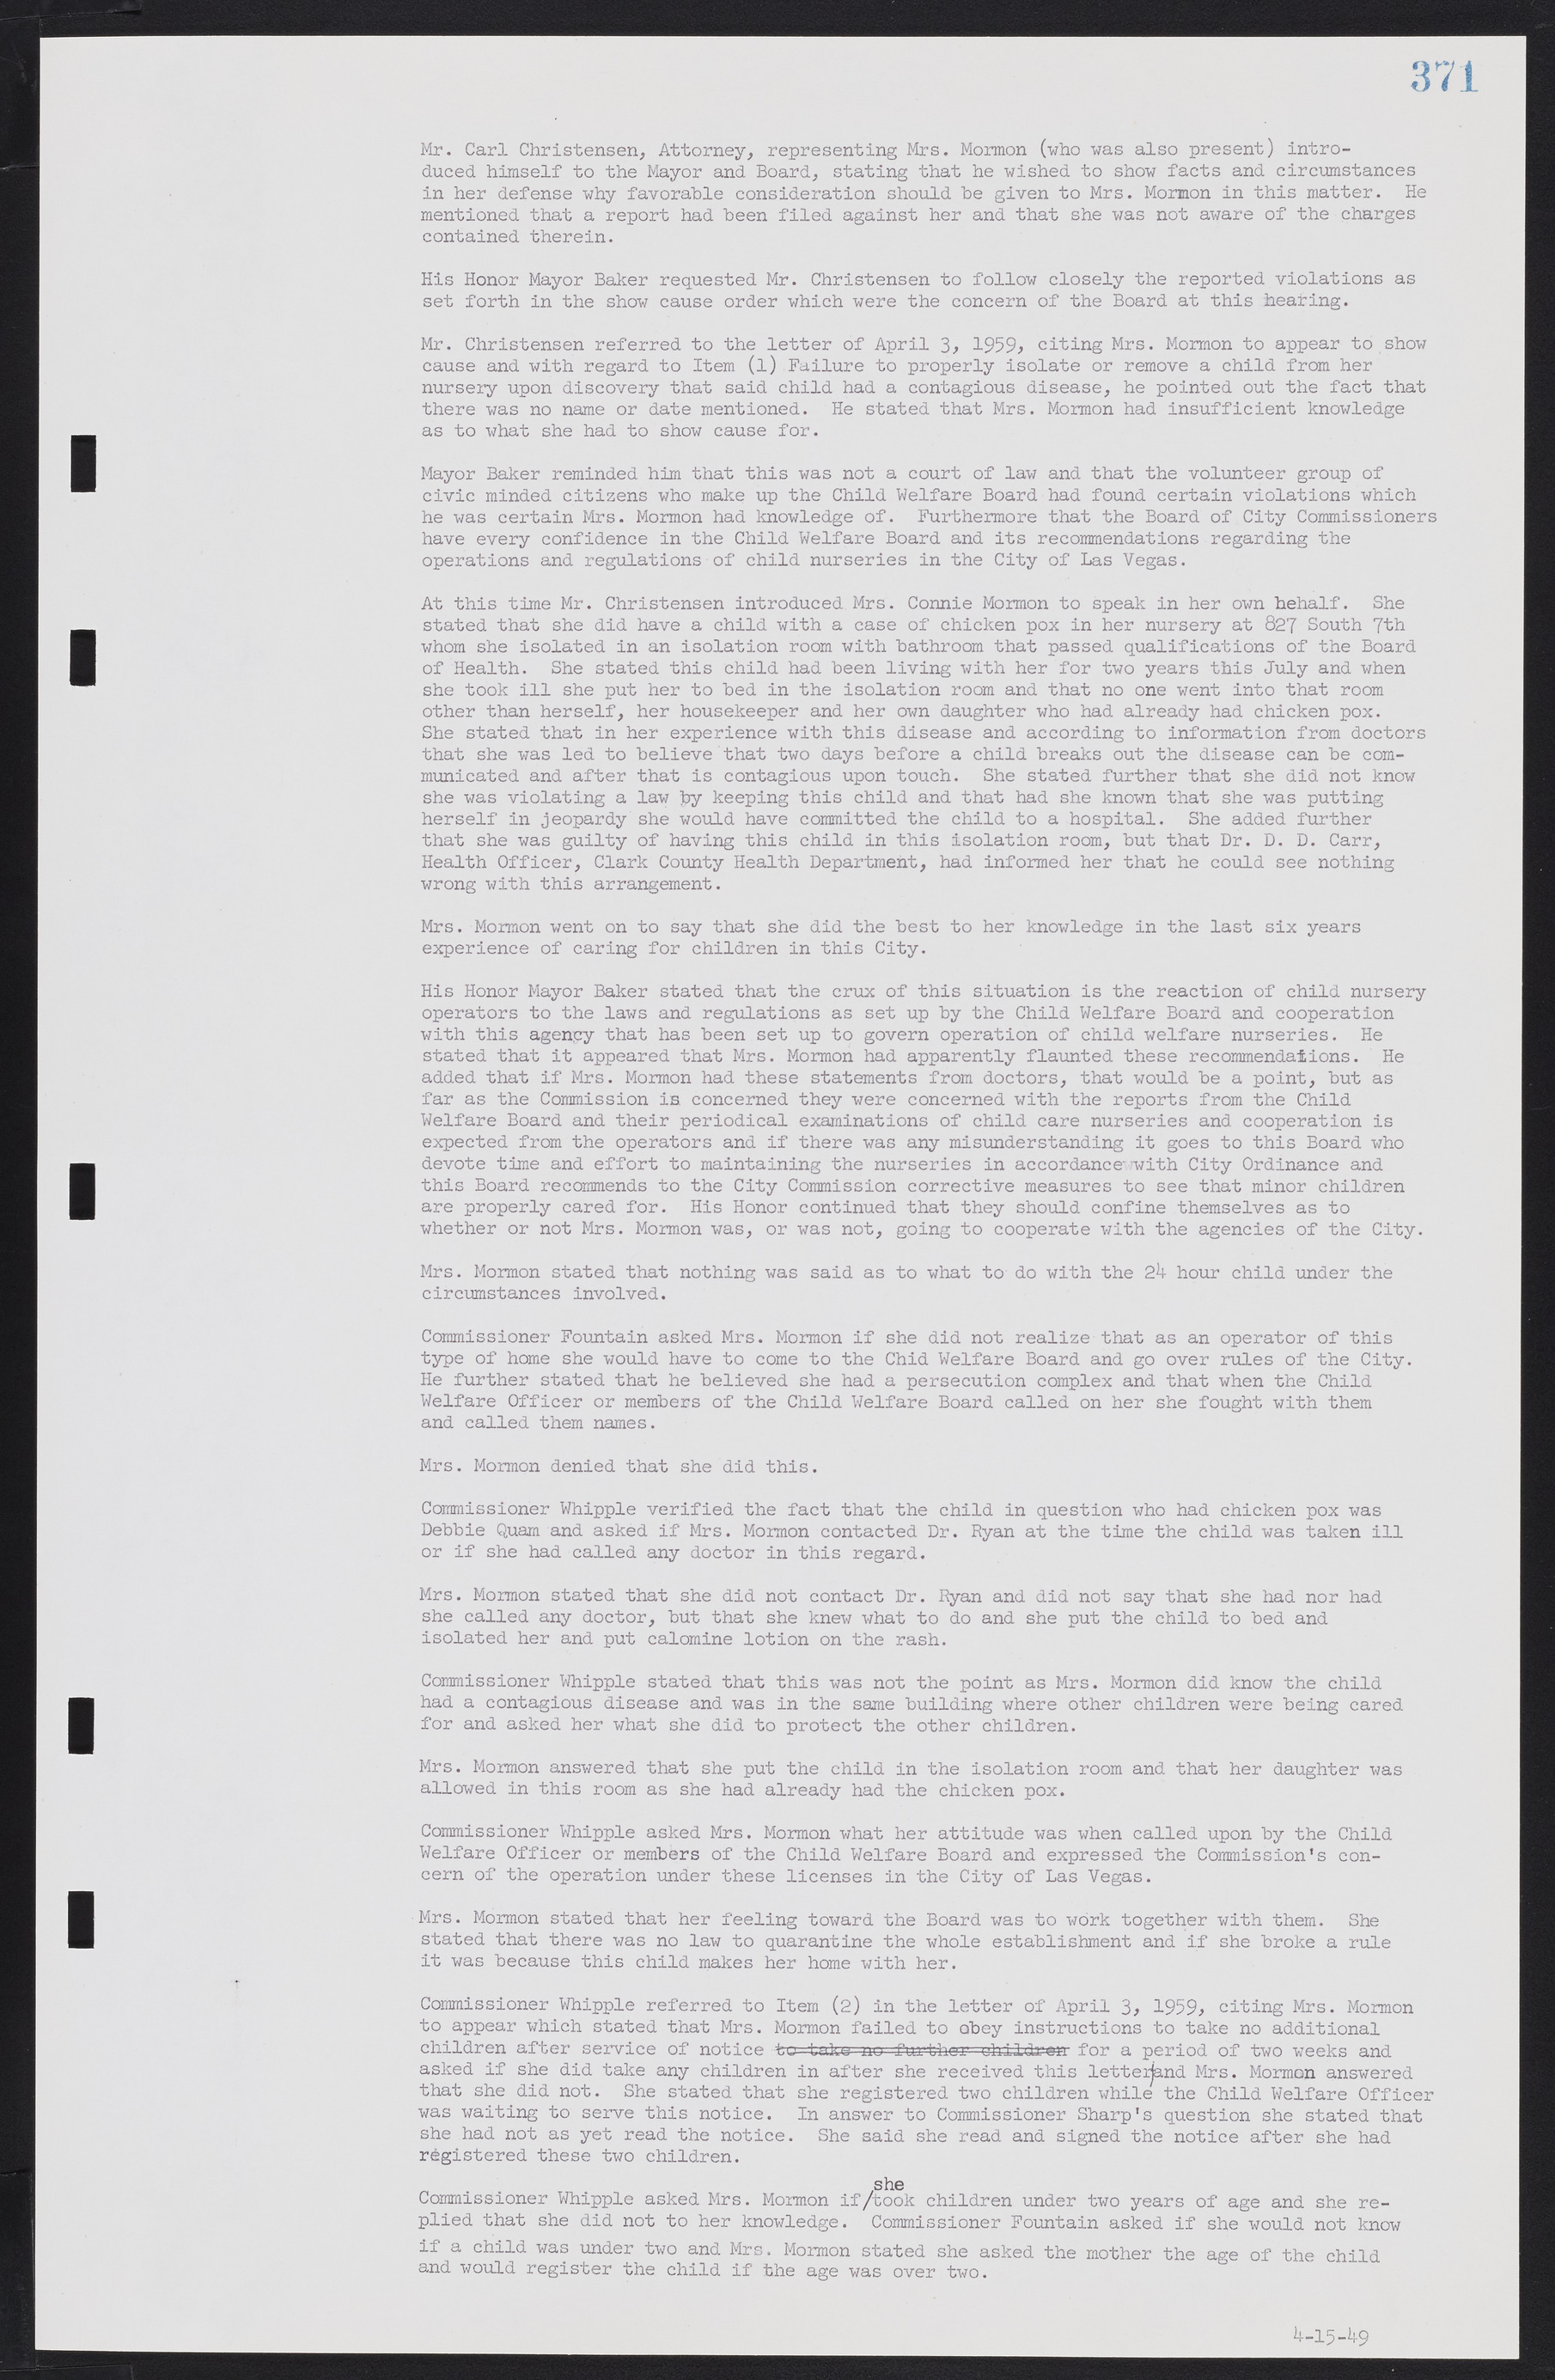 Las Vegas City Commission Minutes, November 20, 1957 to December 2, 1959, lvc000011-407